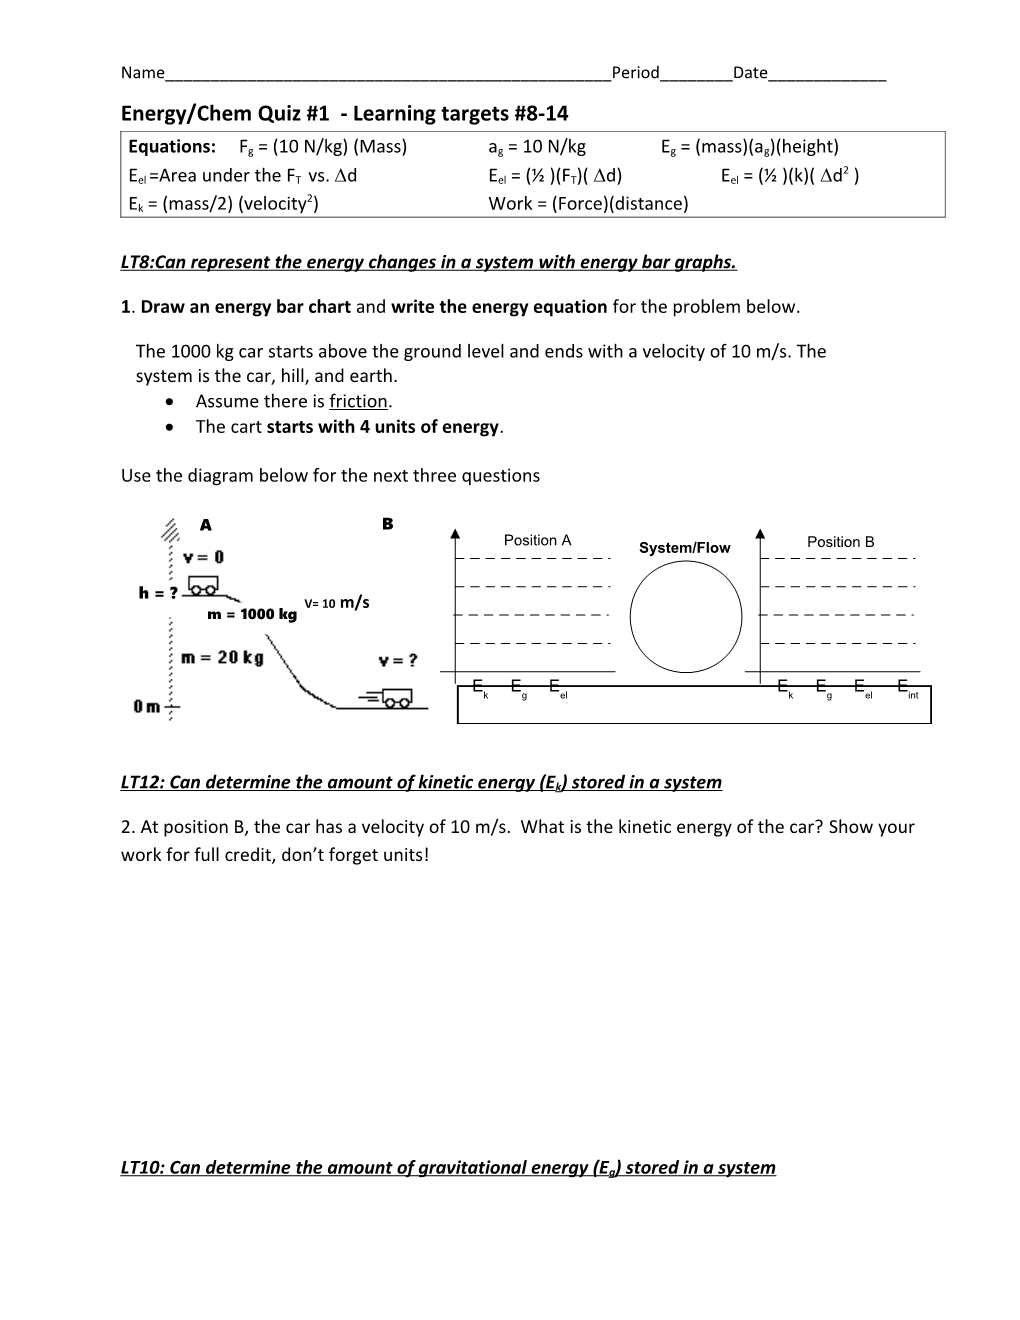 Energy/Chem Quiz #1 - Learning Targets #8-14